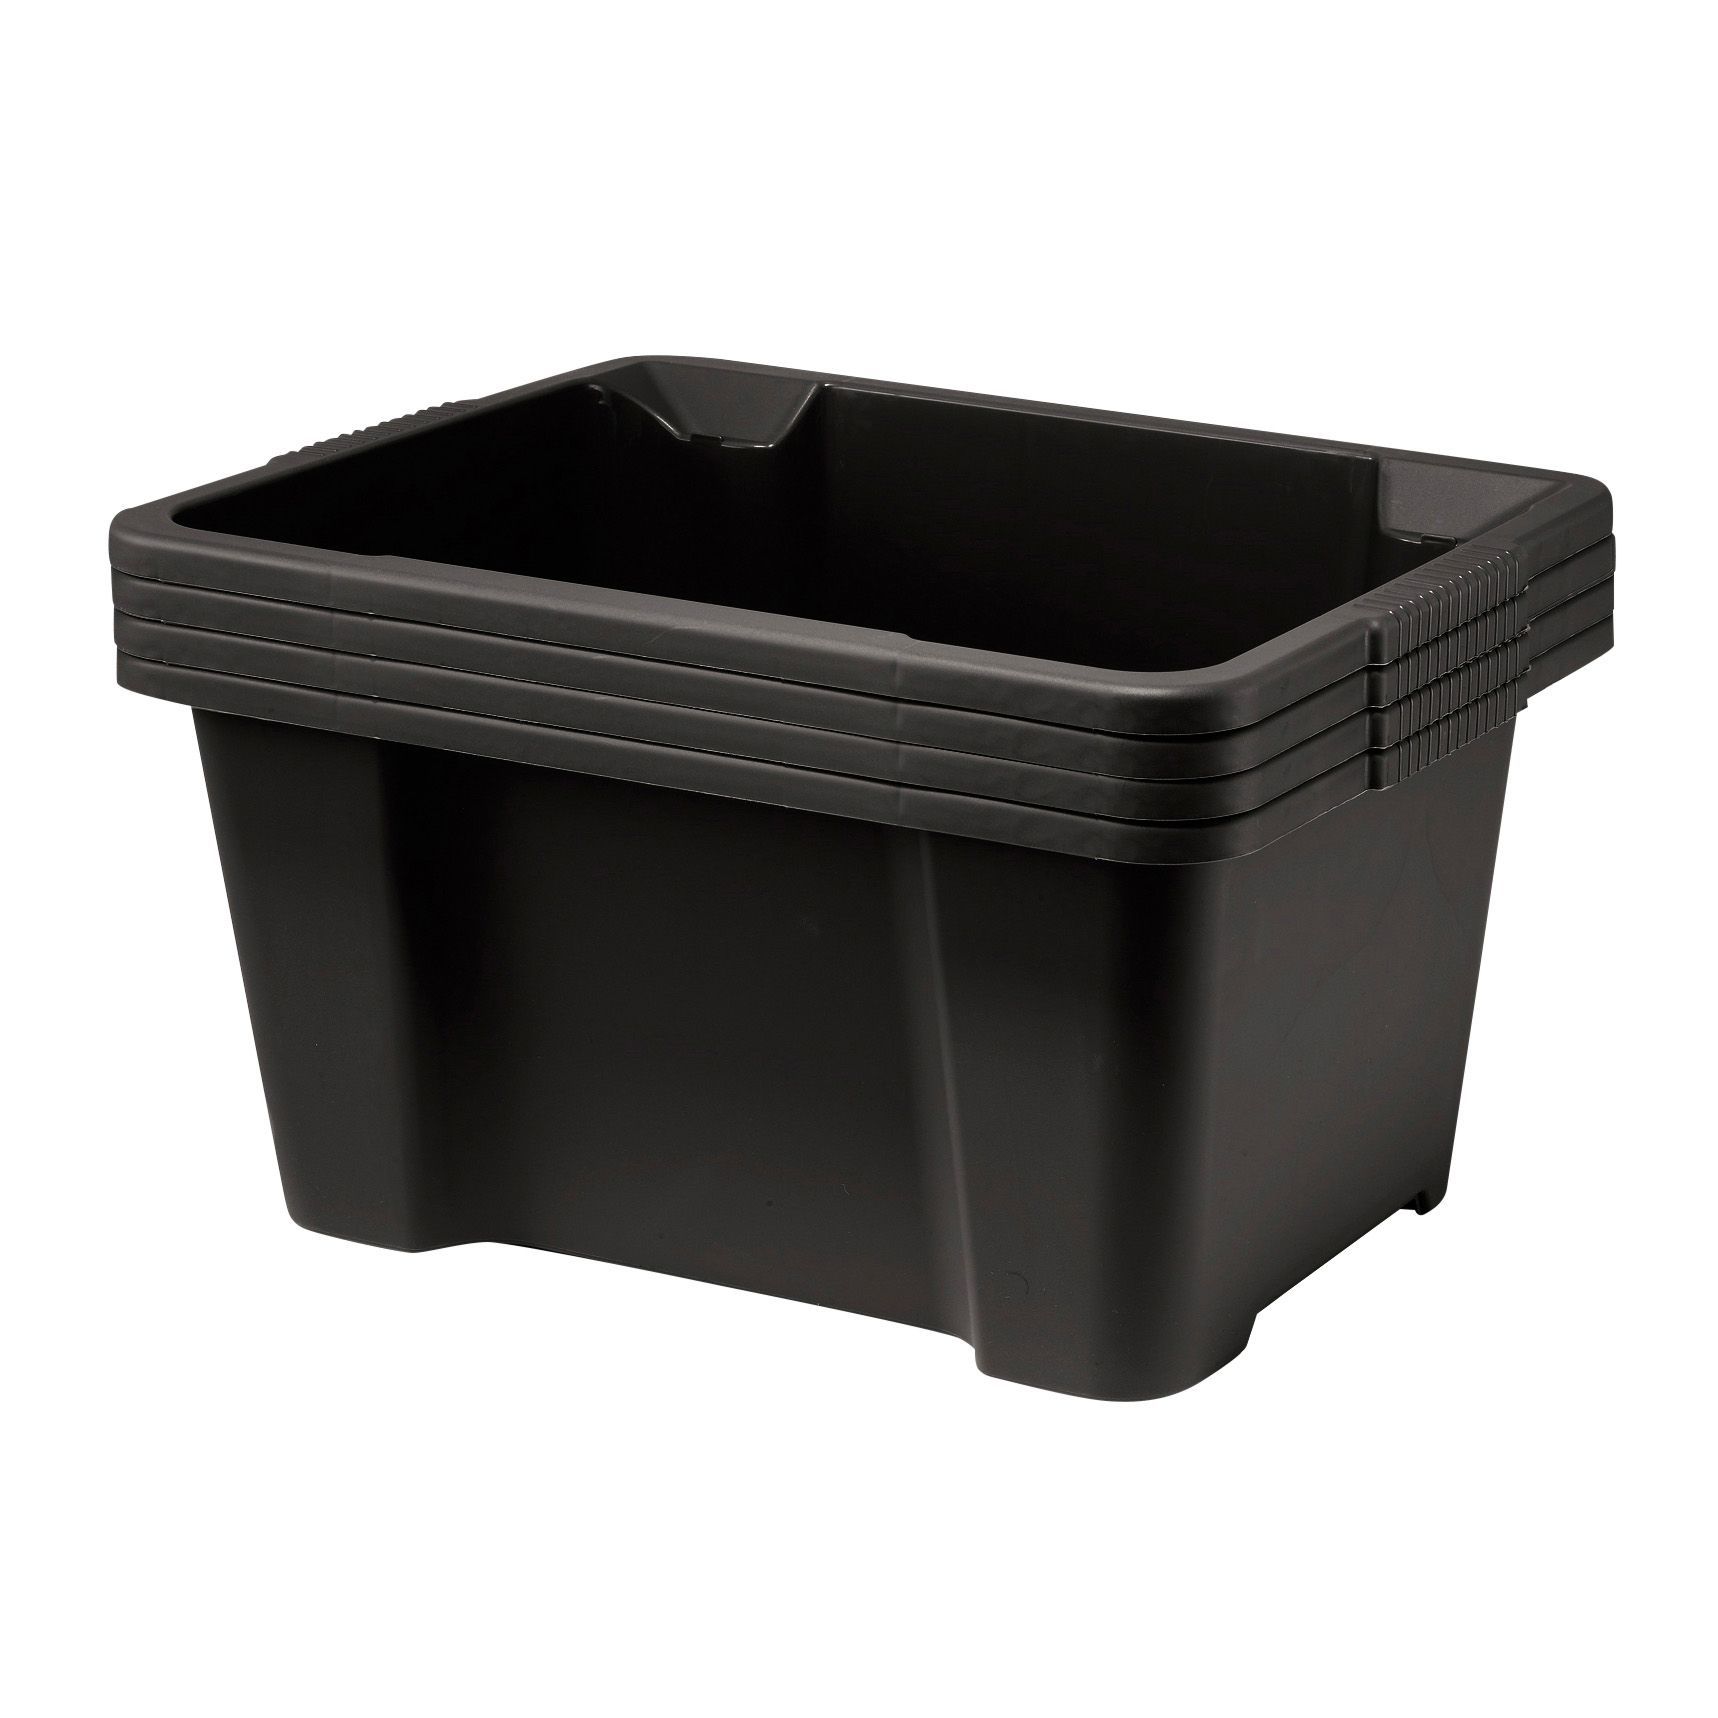 Keter Black Plastic Storage Box, Pack of 4 Departments